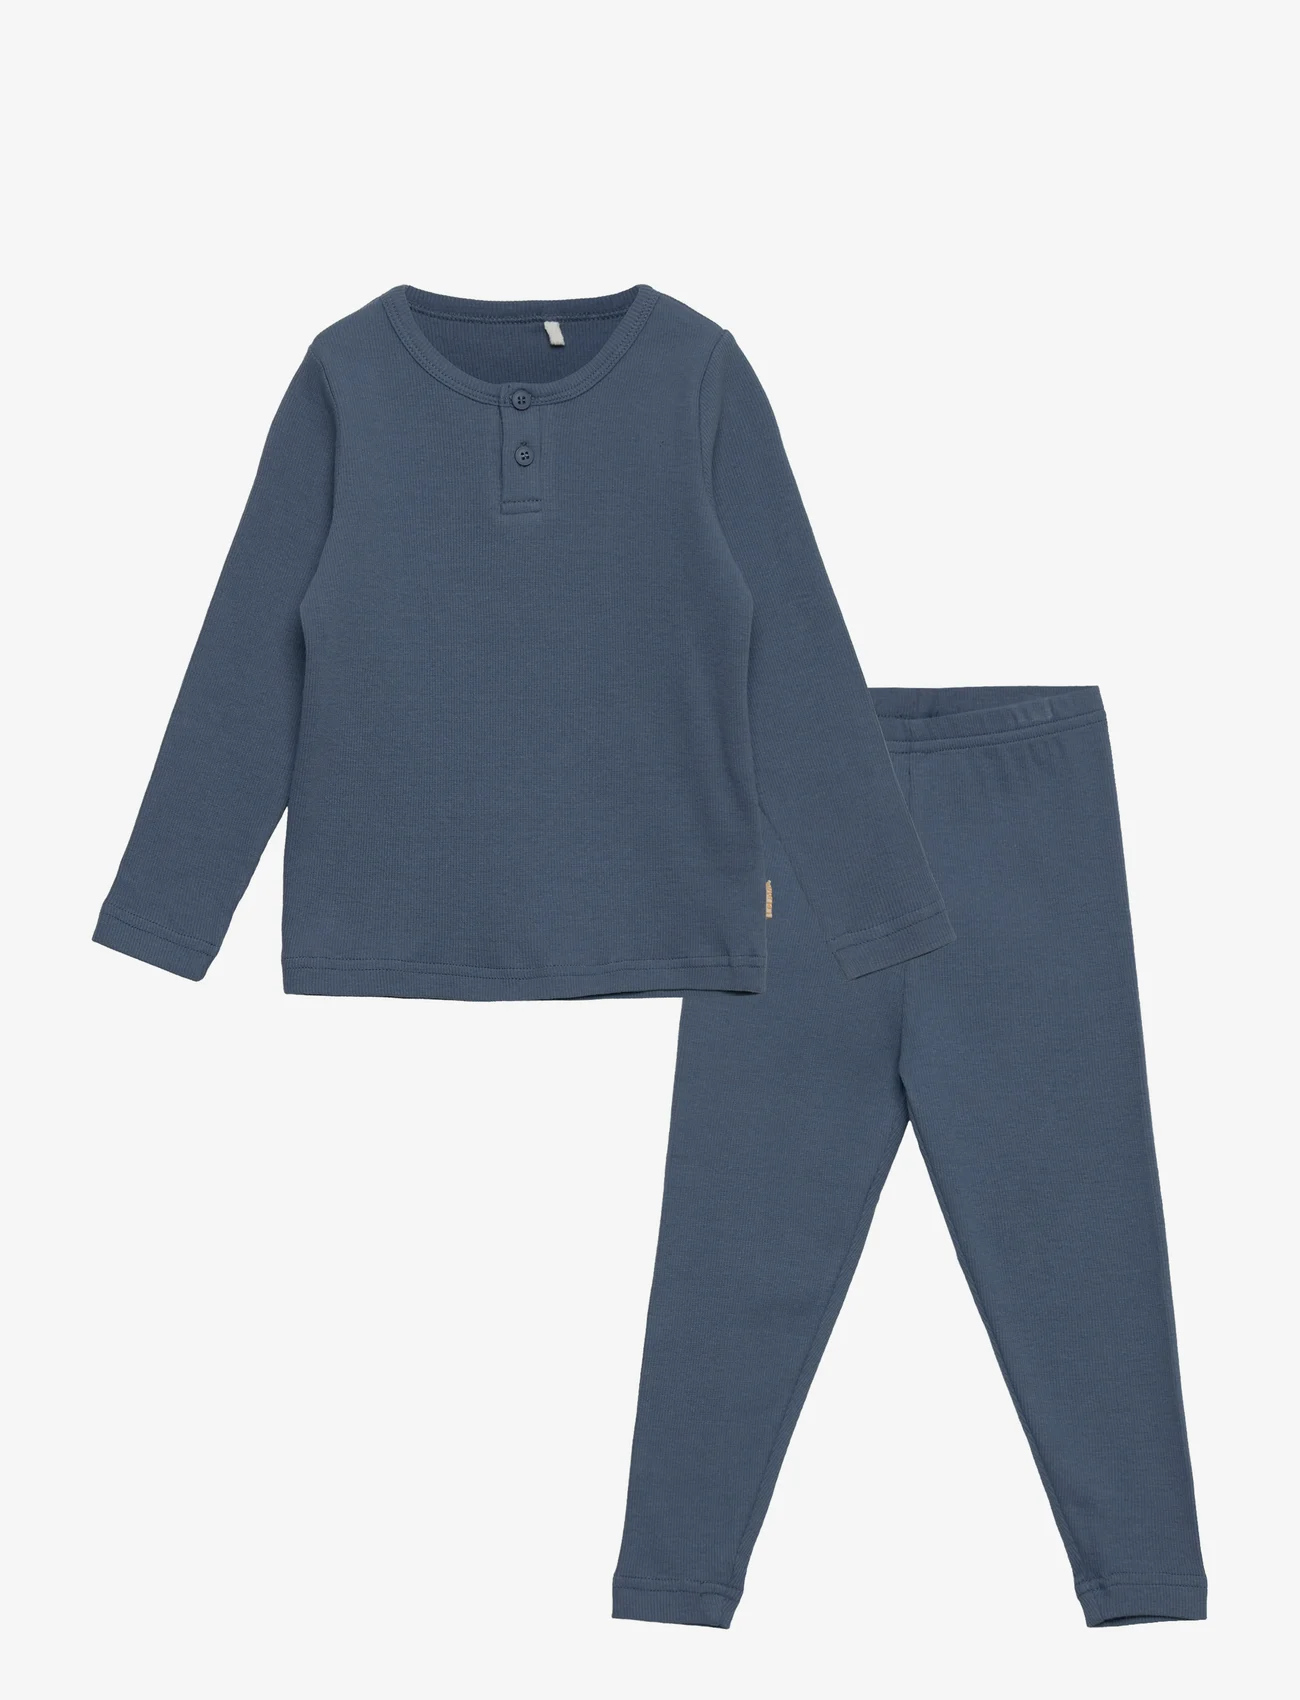 CeLaVi - Pyjamas set - Boy - sett - blue fushion - 0